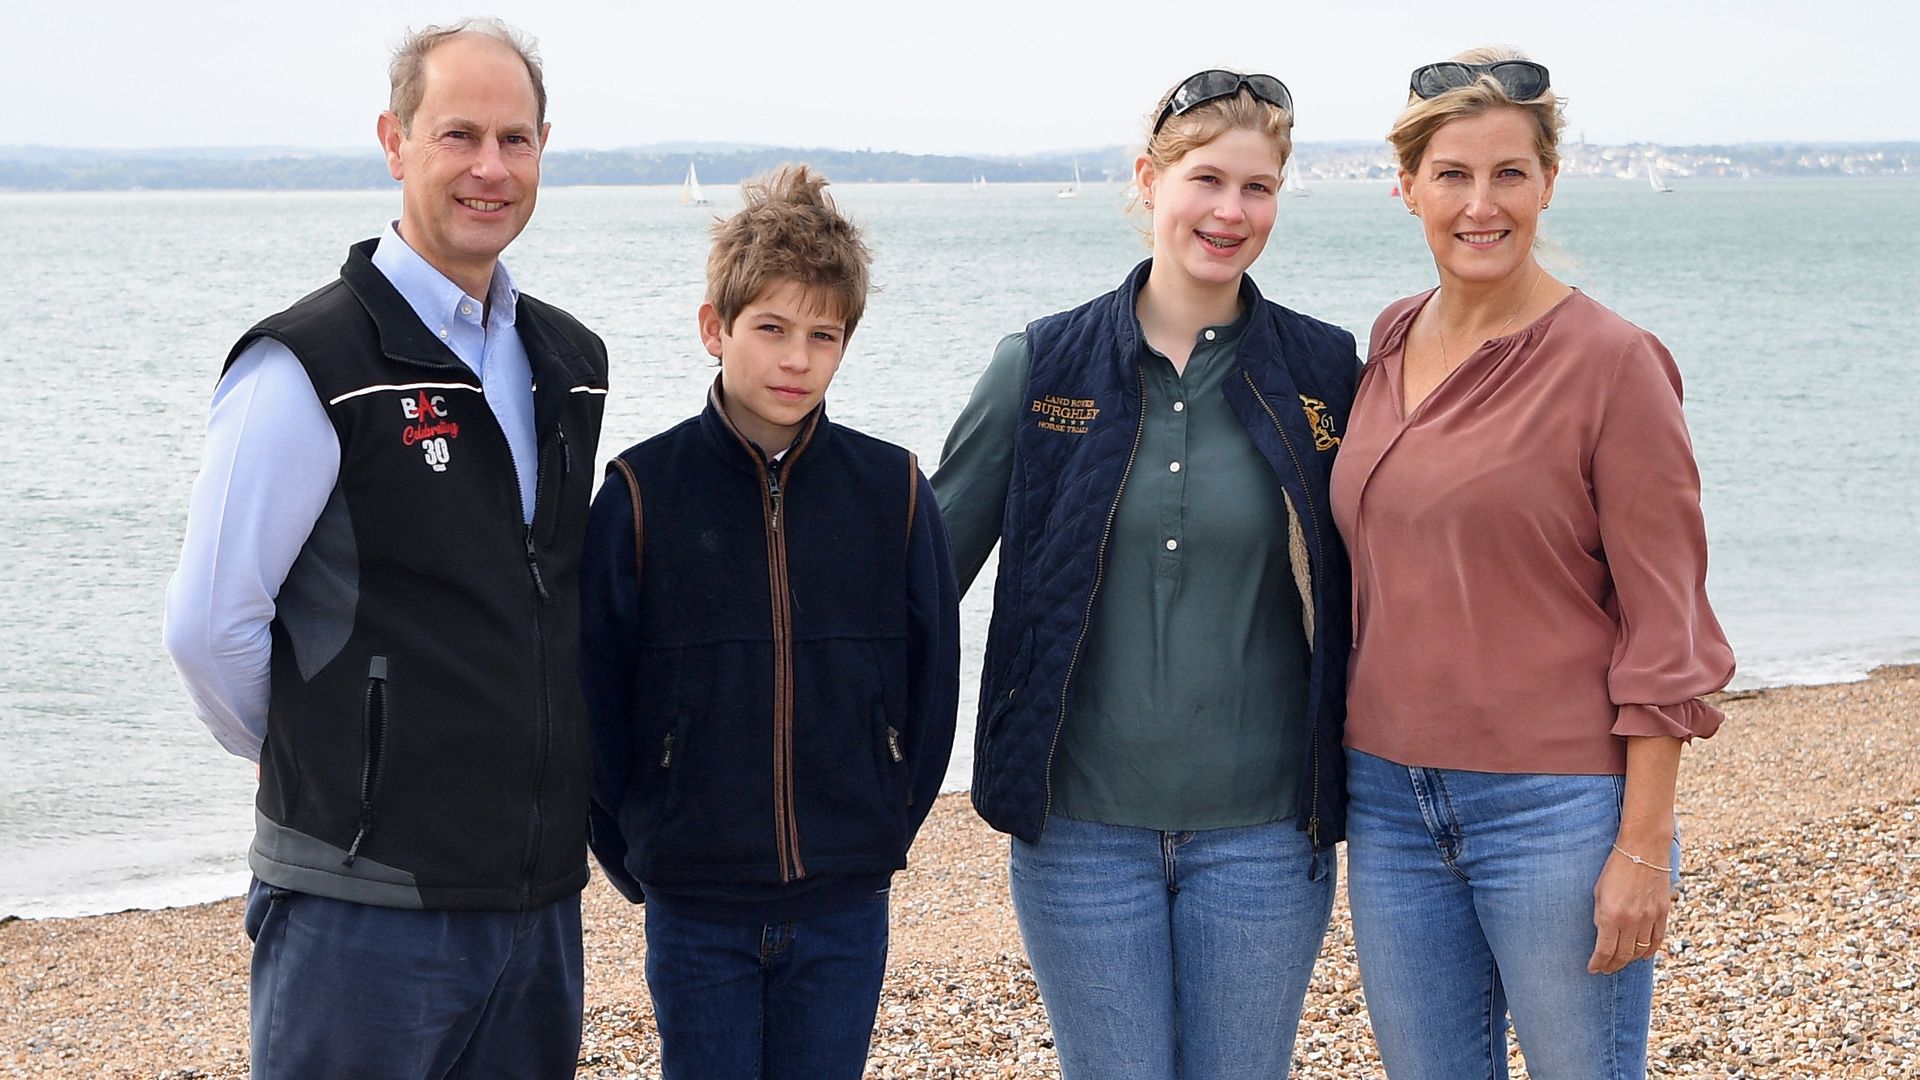 The Duke and Duchess of Edinburgh standing with their children on a beach